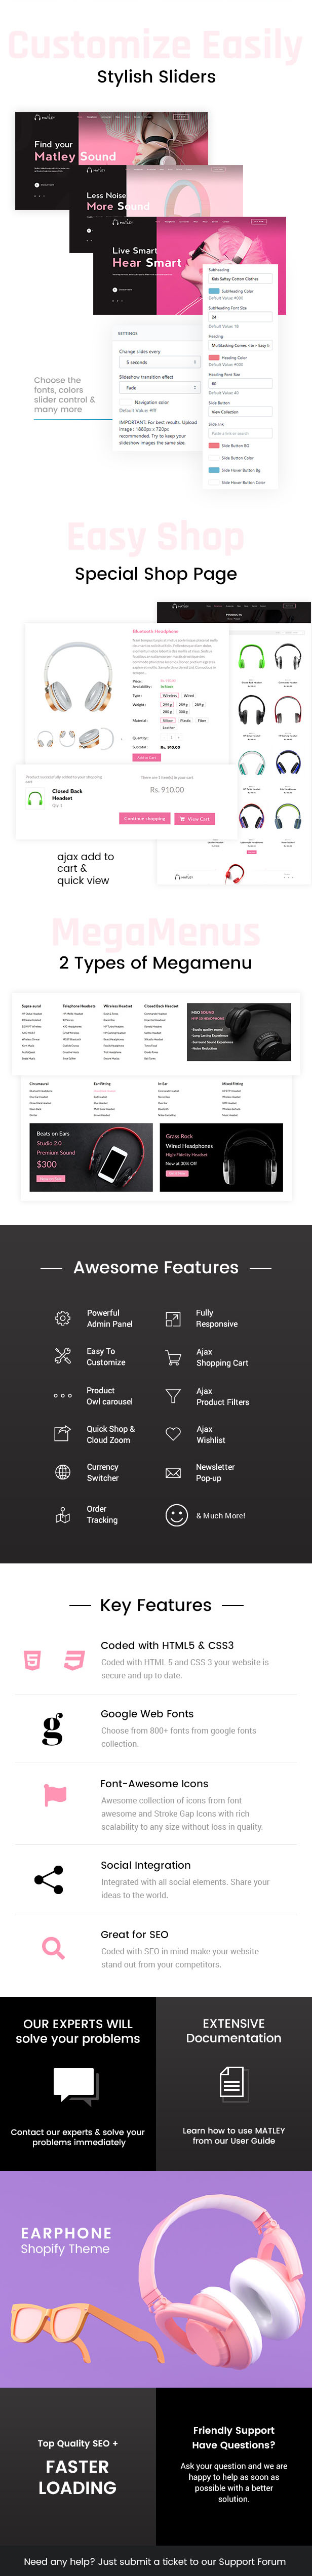 Matley - Headphone & Electronics Store Shopify Theme - 1